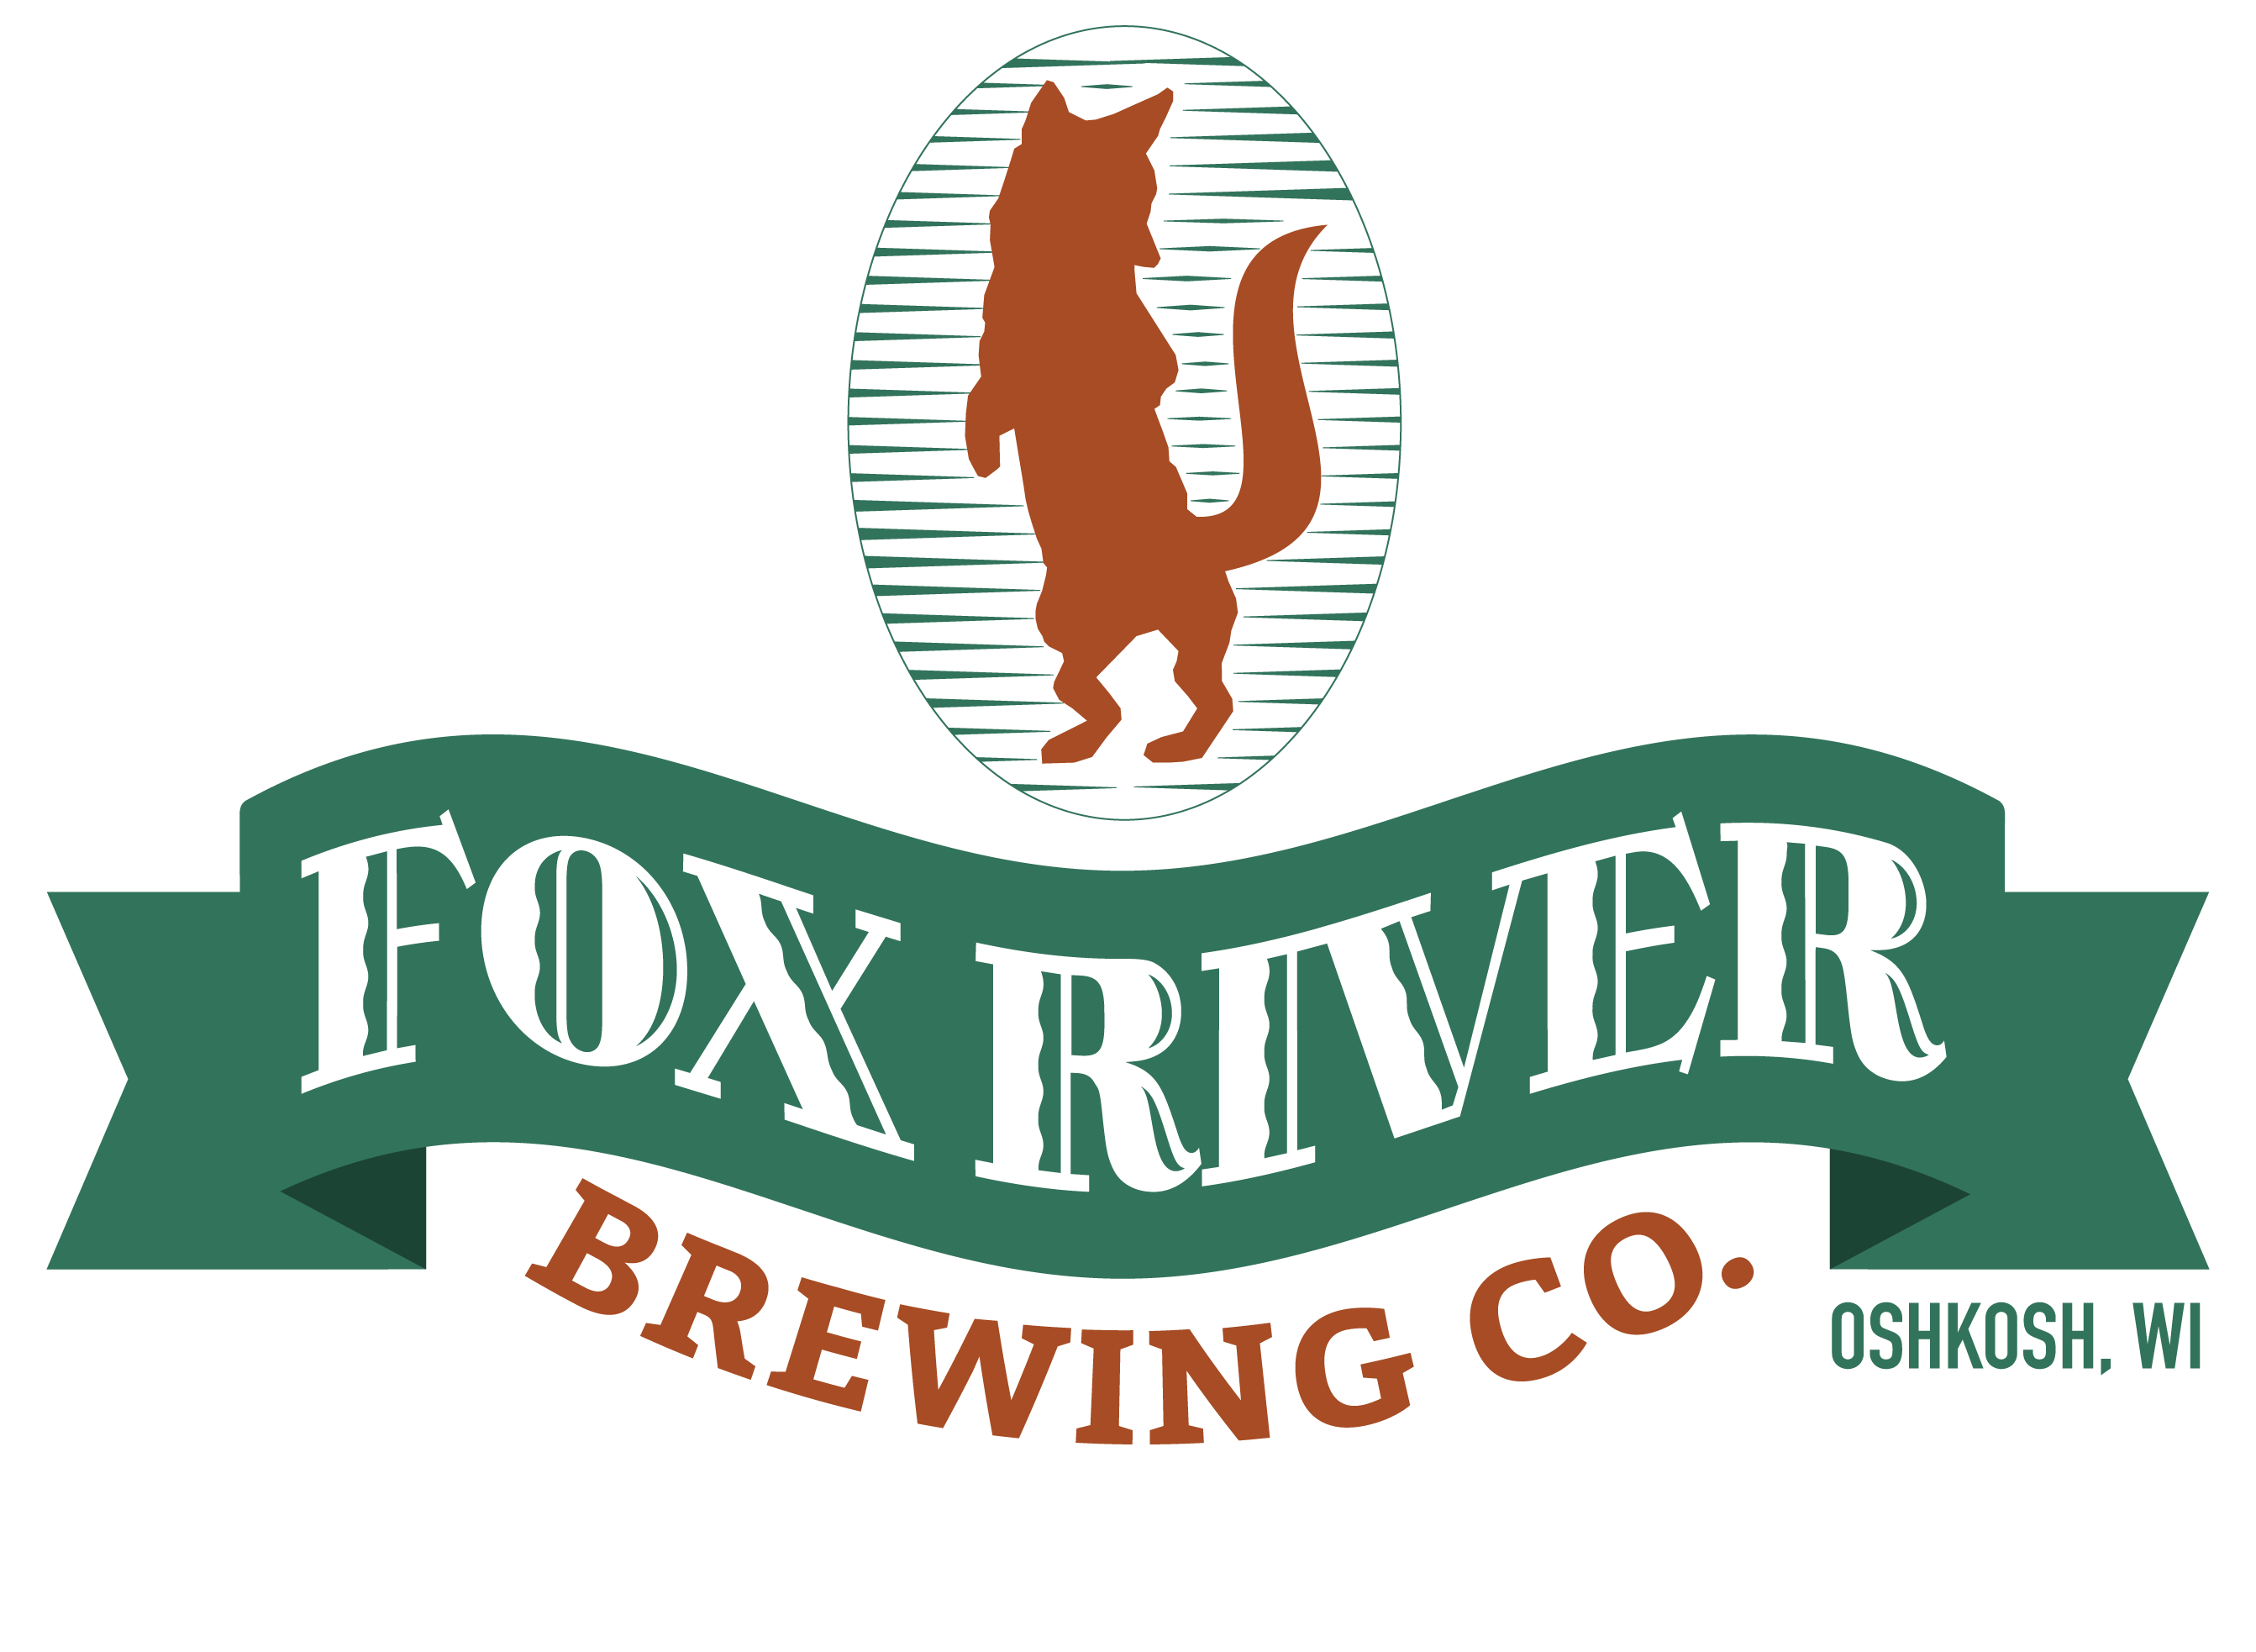 Fox River Brewery Waterfront Restaurant and Brewery - Oshkosh